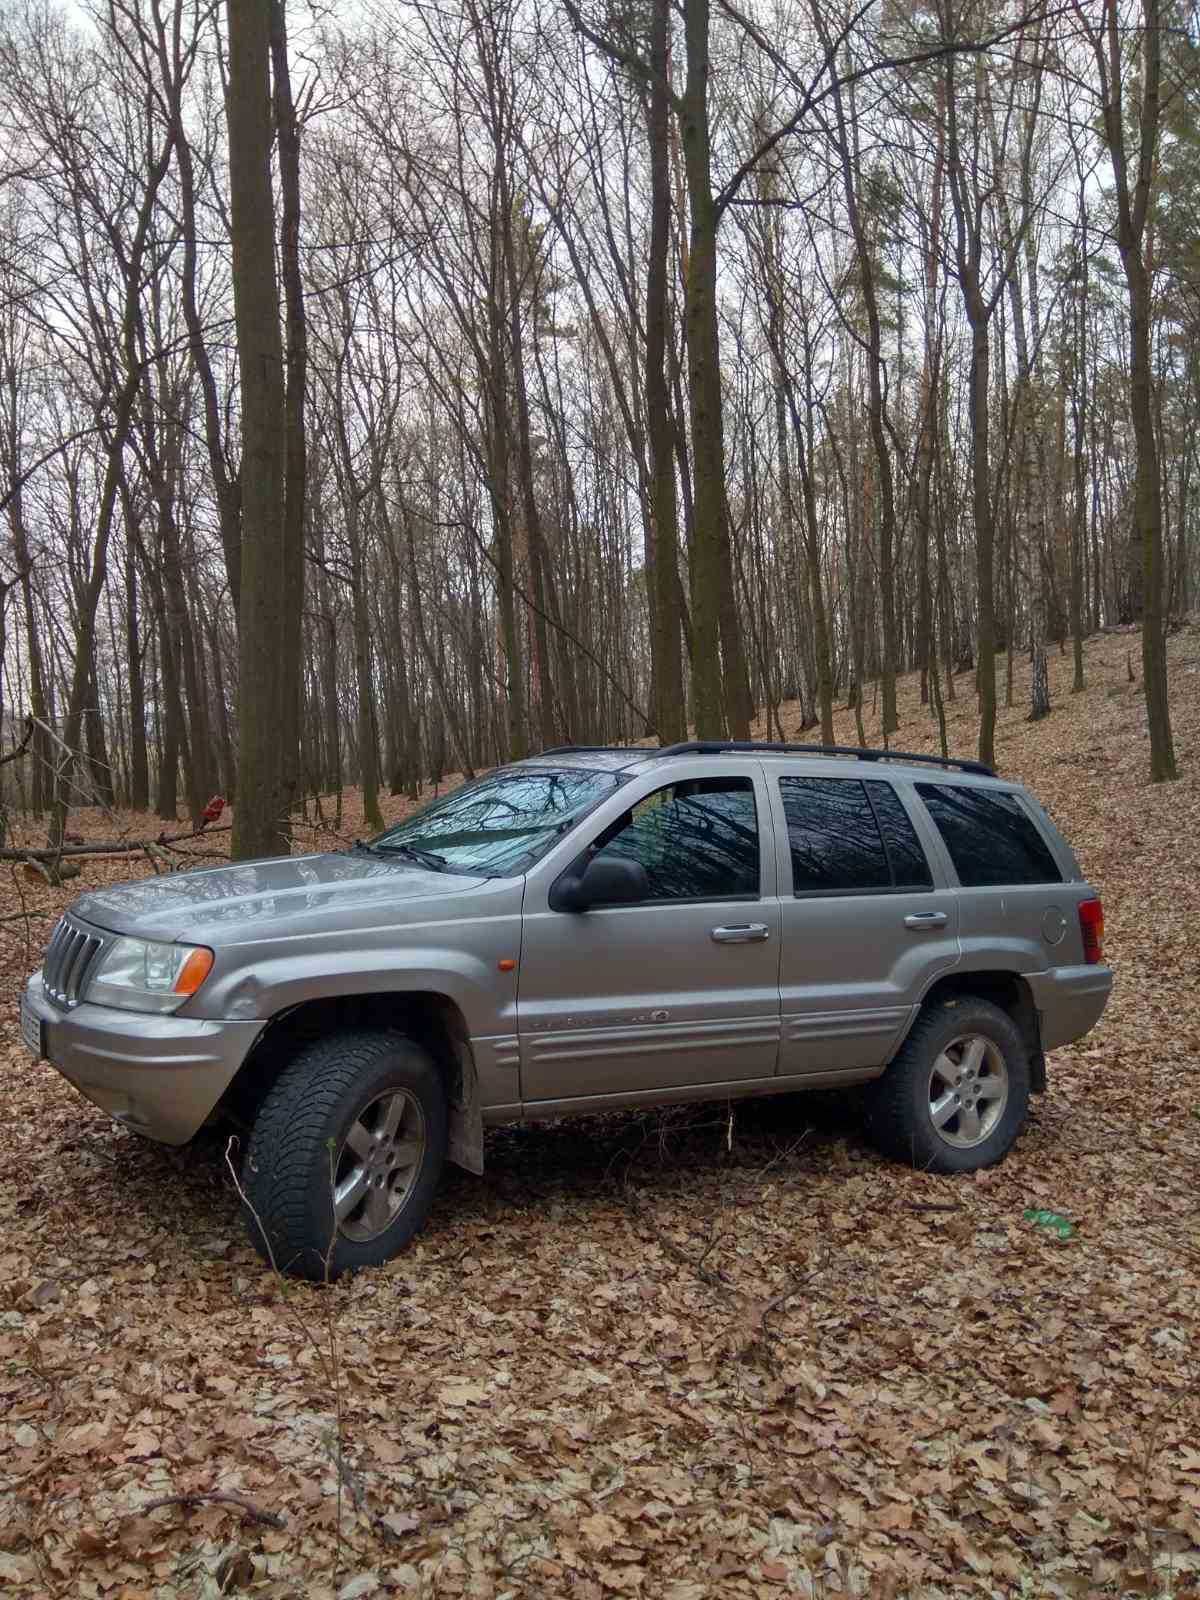 Продам Jeep Grand Cherokee WJ 2002 V8 4.7 HO Overland. Газ/бензин.